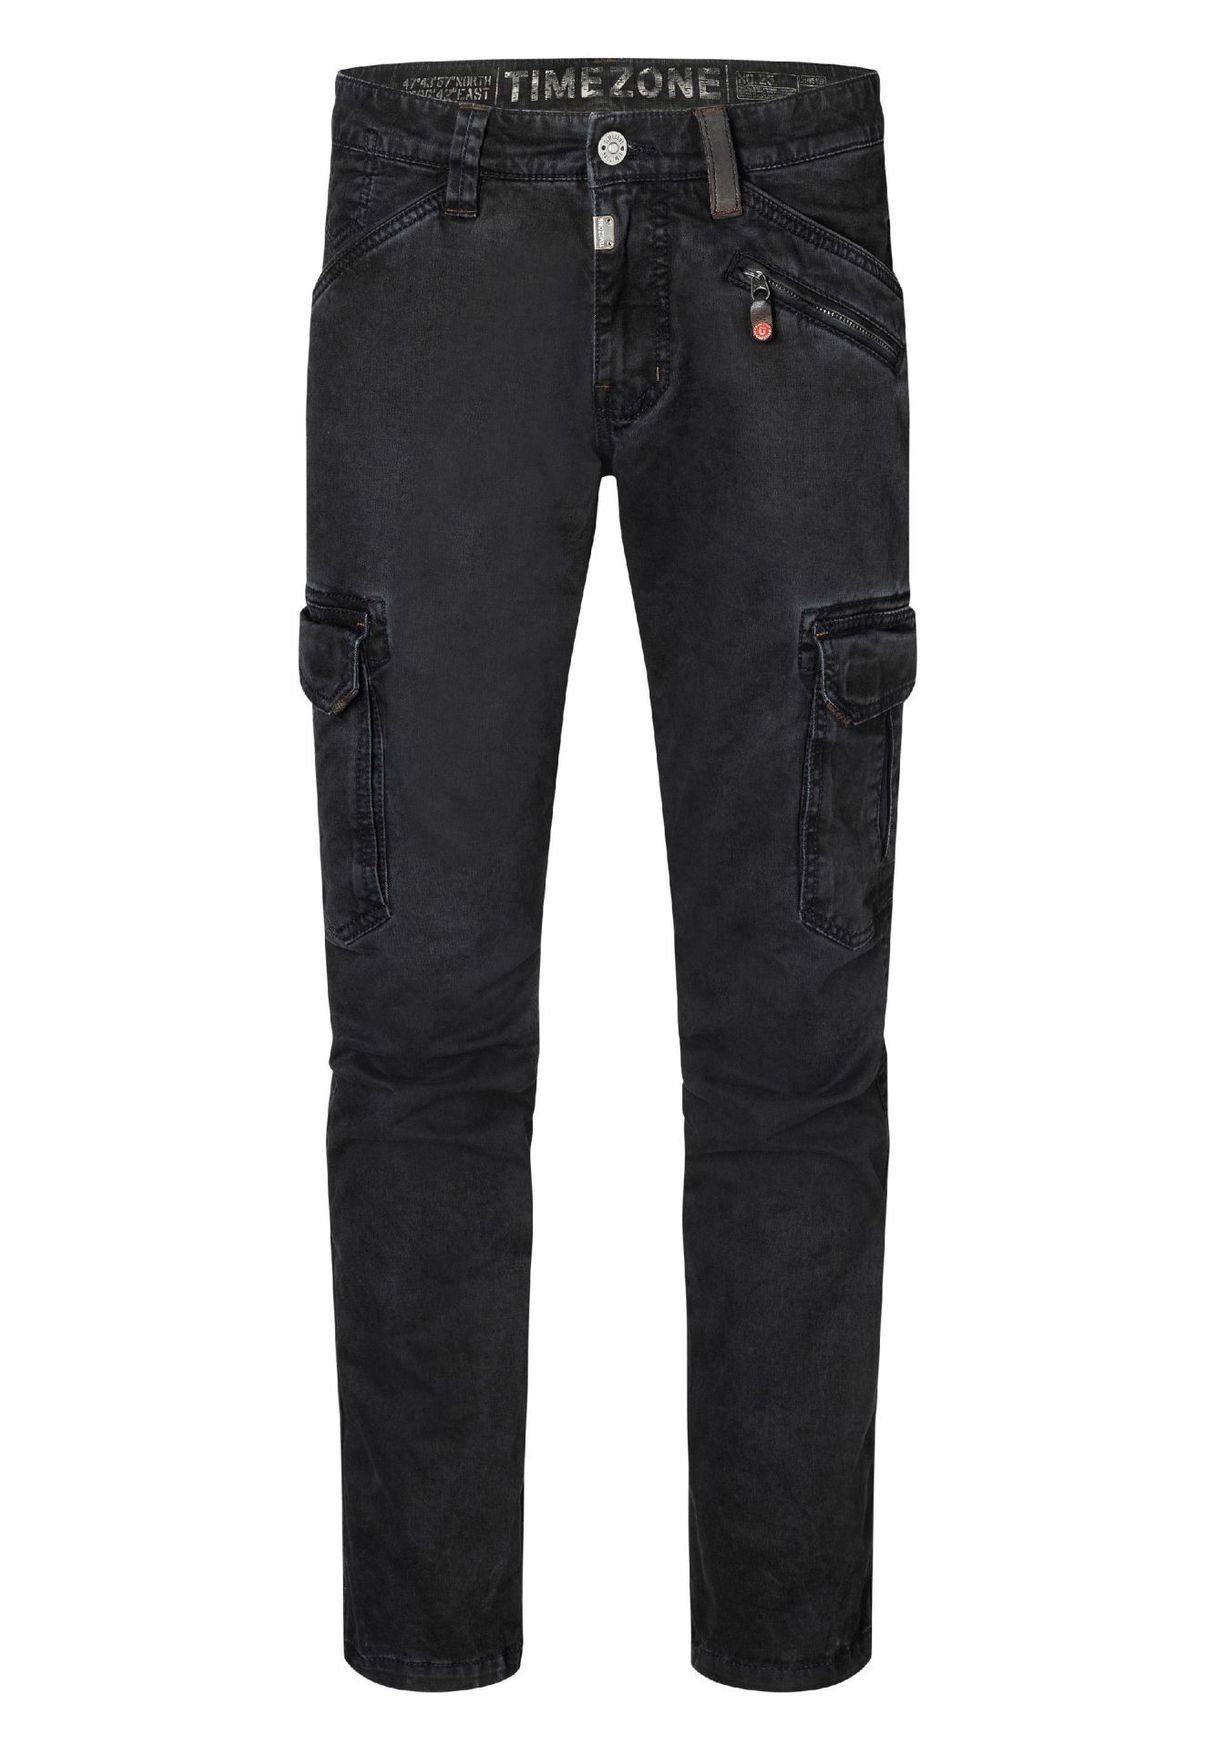 TIMEZONE Cargohose Cargo Denim BenTZ Hose 5178 Slim in Schwarz Stretch Fit Regular Jeans